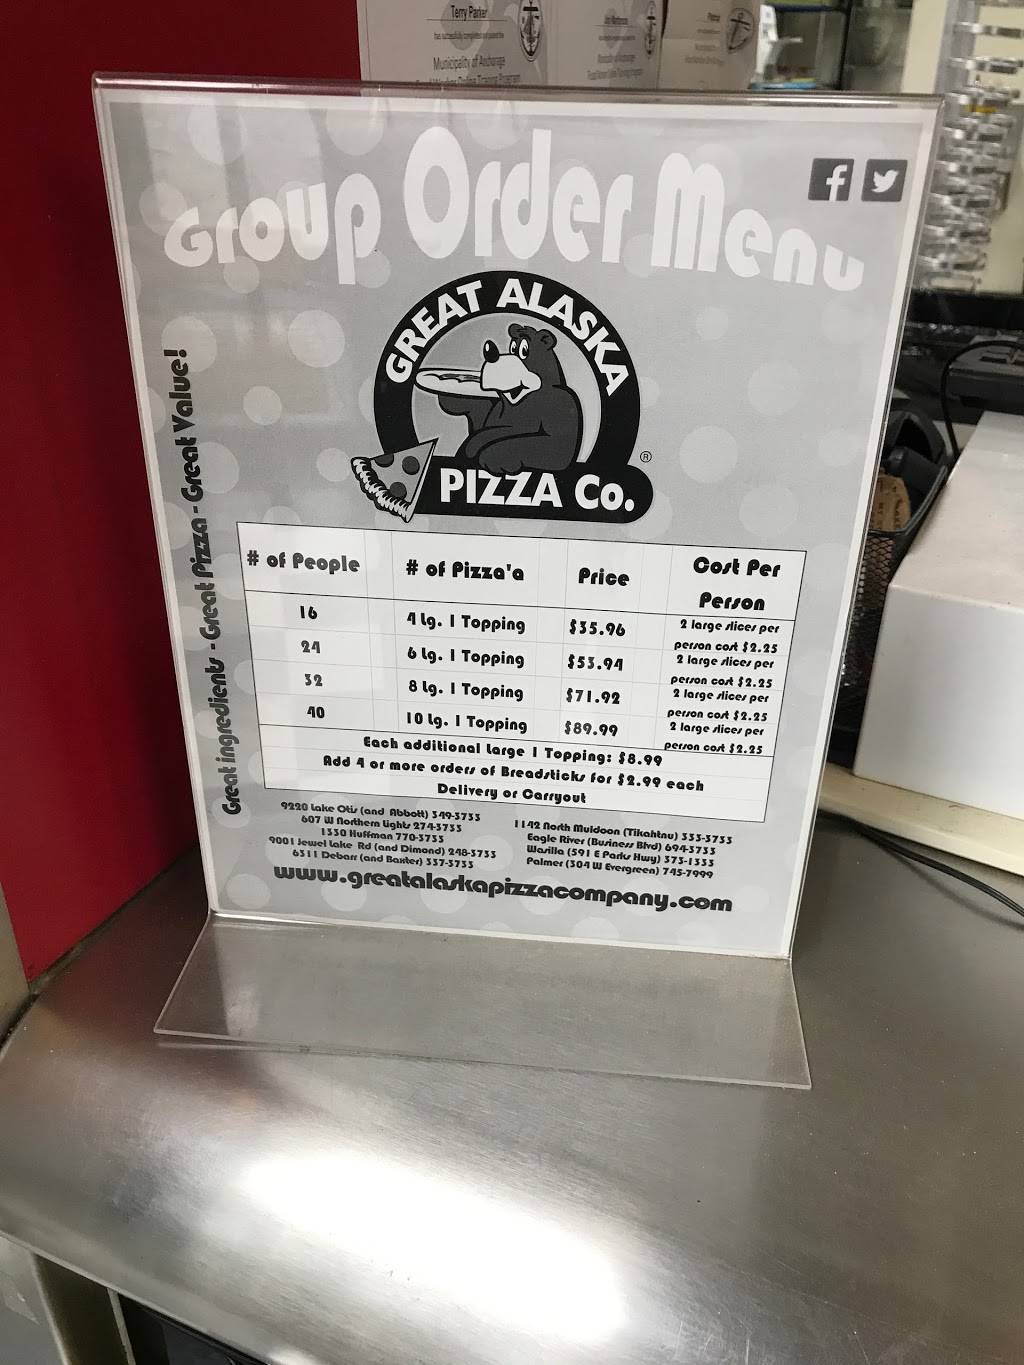 Great Alaska Pizza Company | 9001 Jewel Lake Rd, Anchorage, AK 99502, USA | Phone: (907) 248-3733